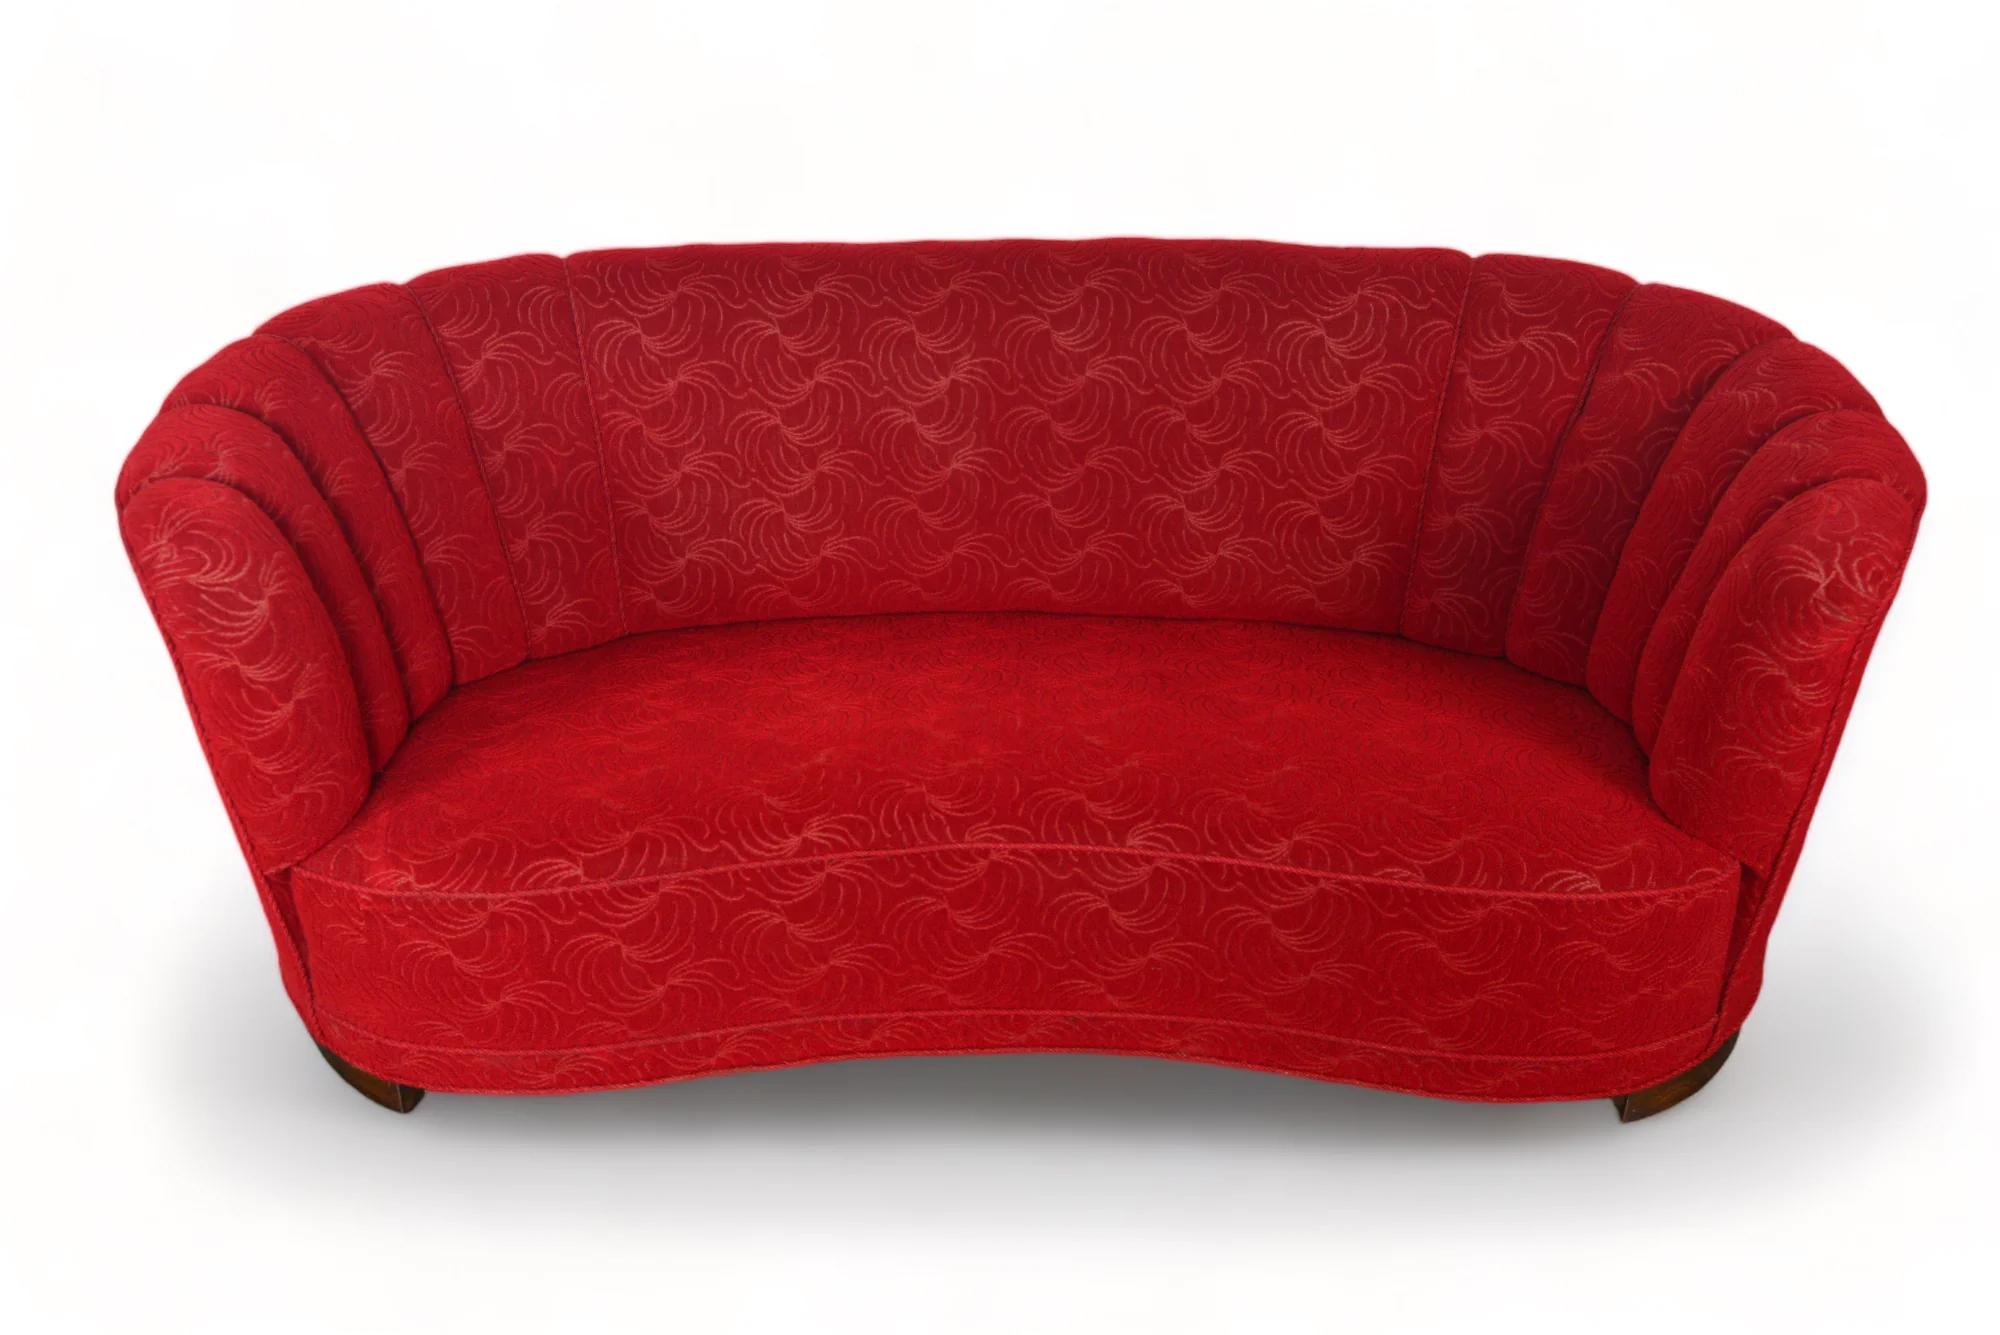 Mid-Century Modern 1940s Banana Sofa In Crimson Brocade Fabric For Sale